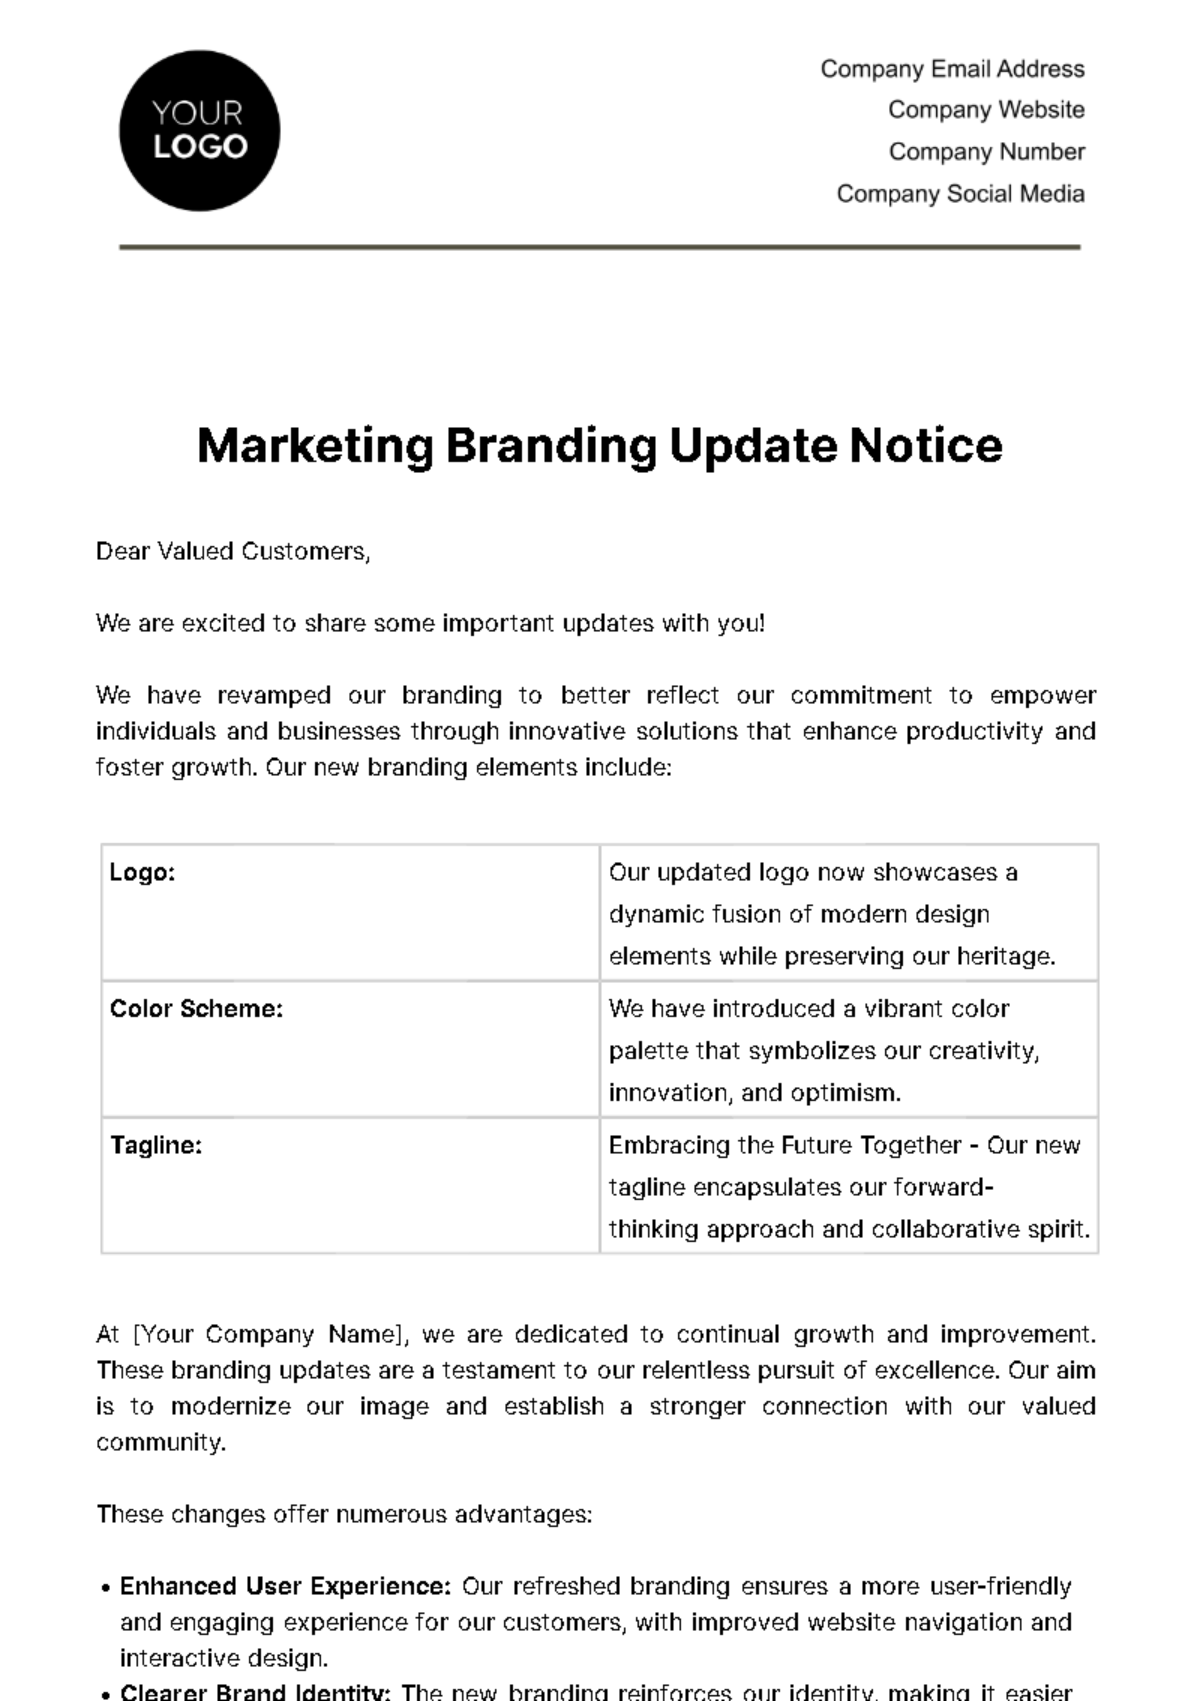 Marketing Branding Update Notice Template